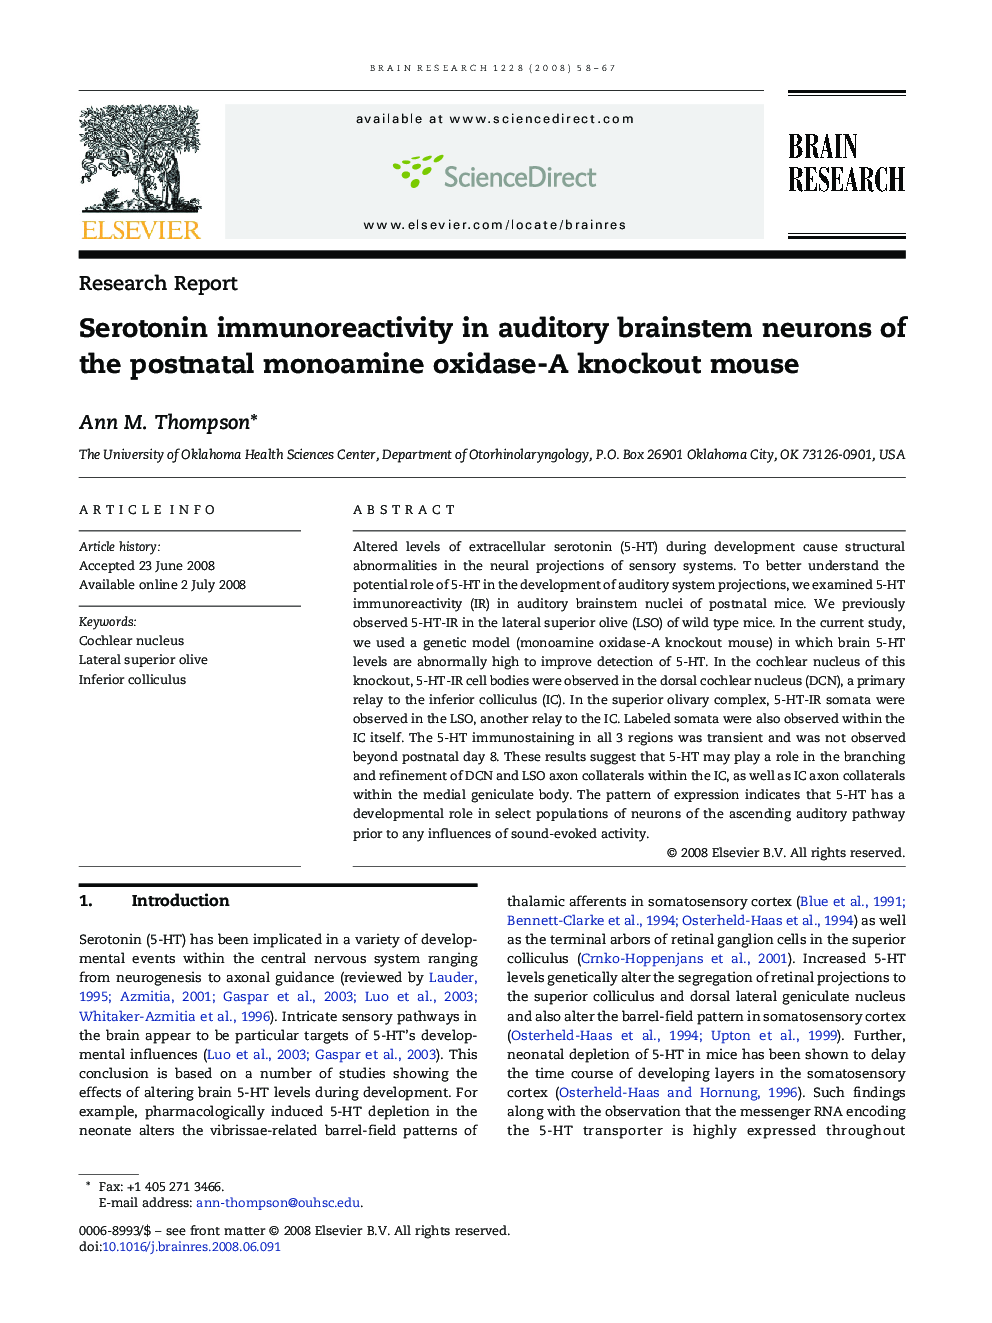 Serotonin immunoreactivity in auditory brainstem neurons of the postnatal monoamine oxidase-A knockout mouse